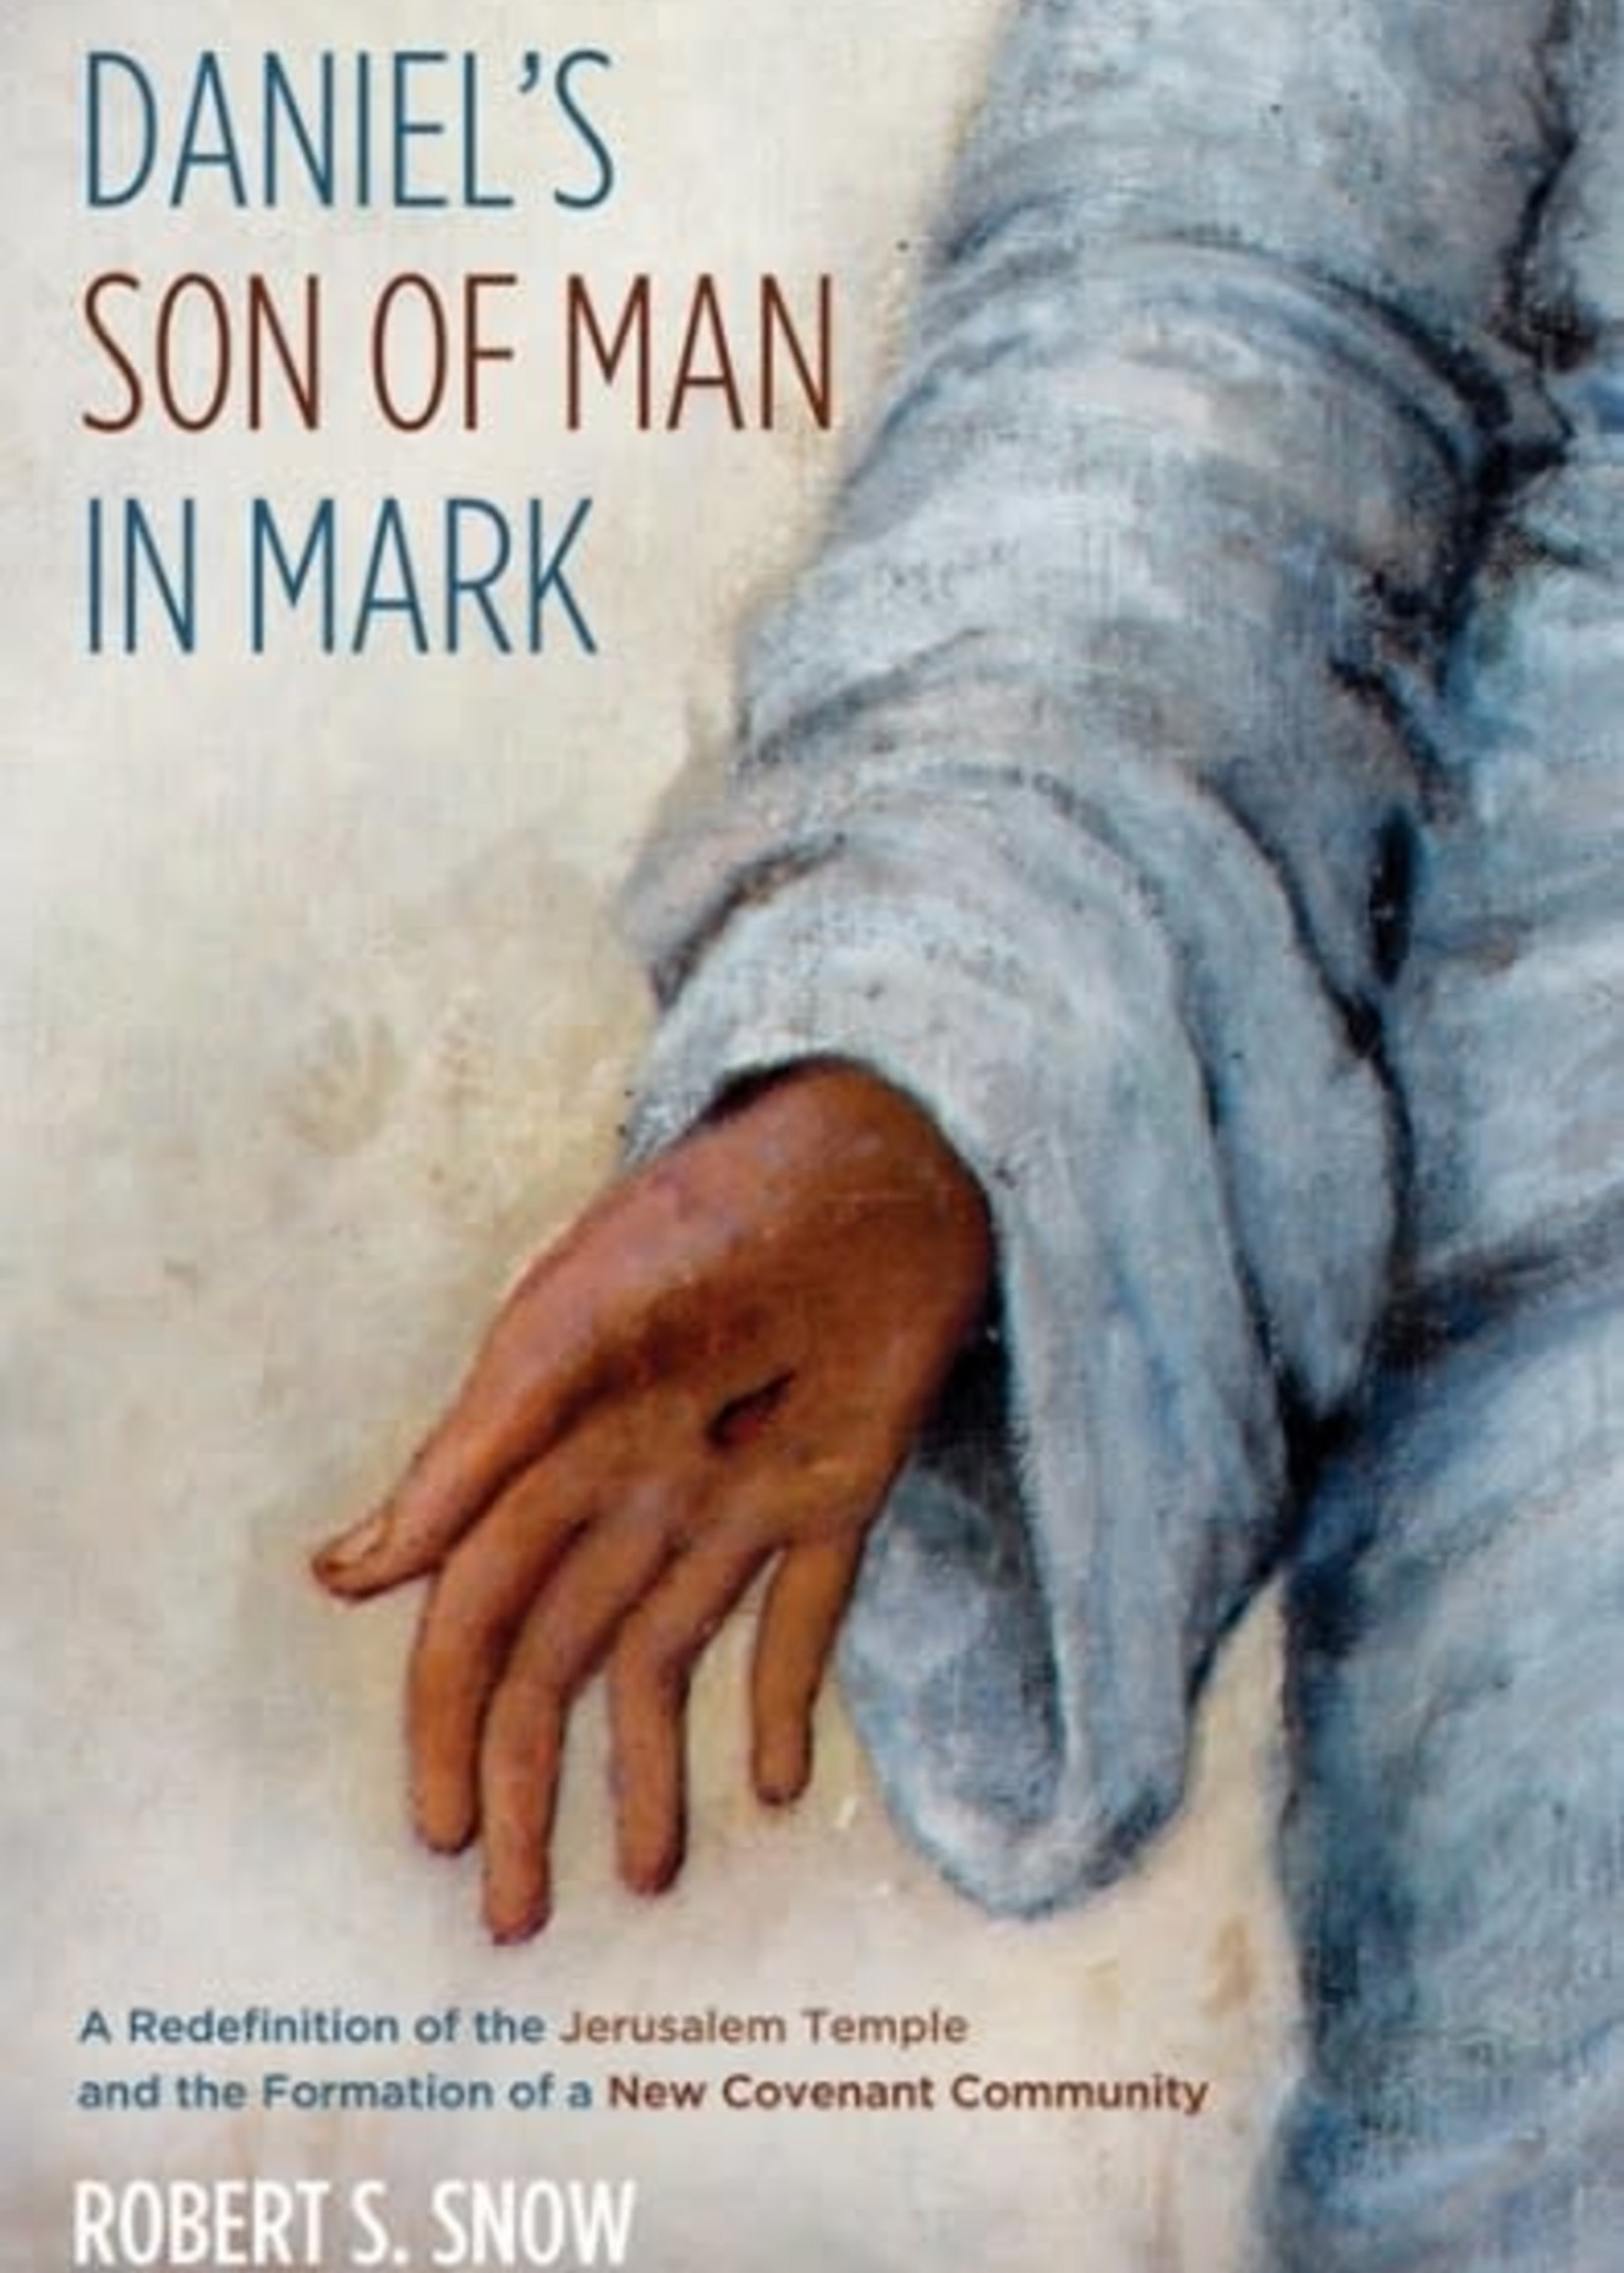 Daniel's Son of Man in Mark by Robert S. Snow